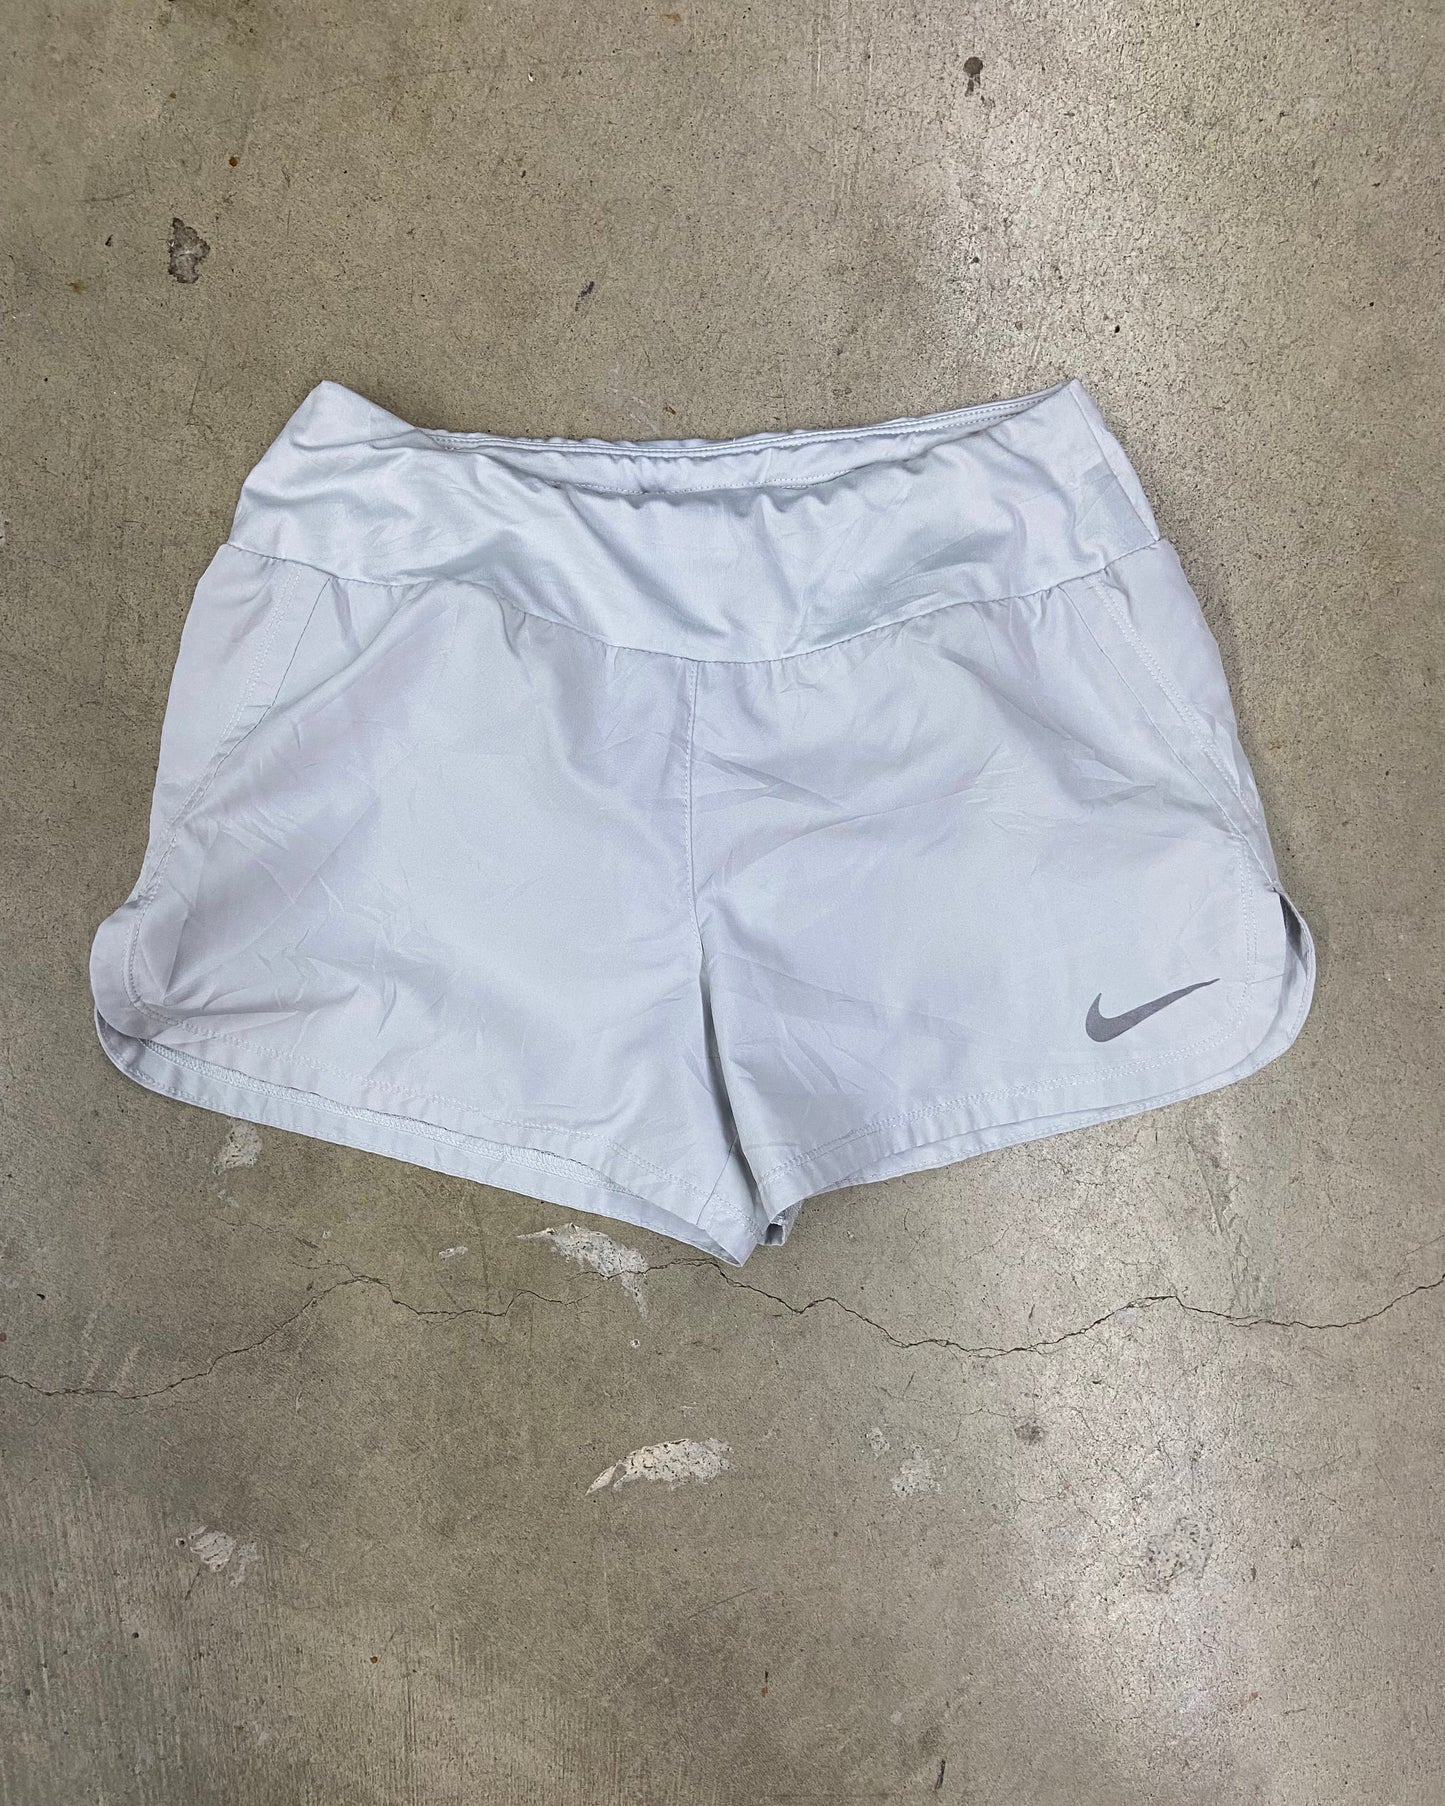 Wmns Nike Dri-Fit Light Grey Running Shorts Sz XS